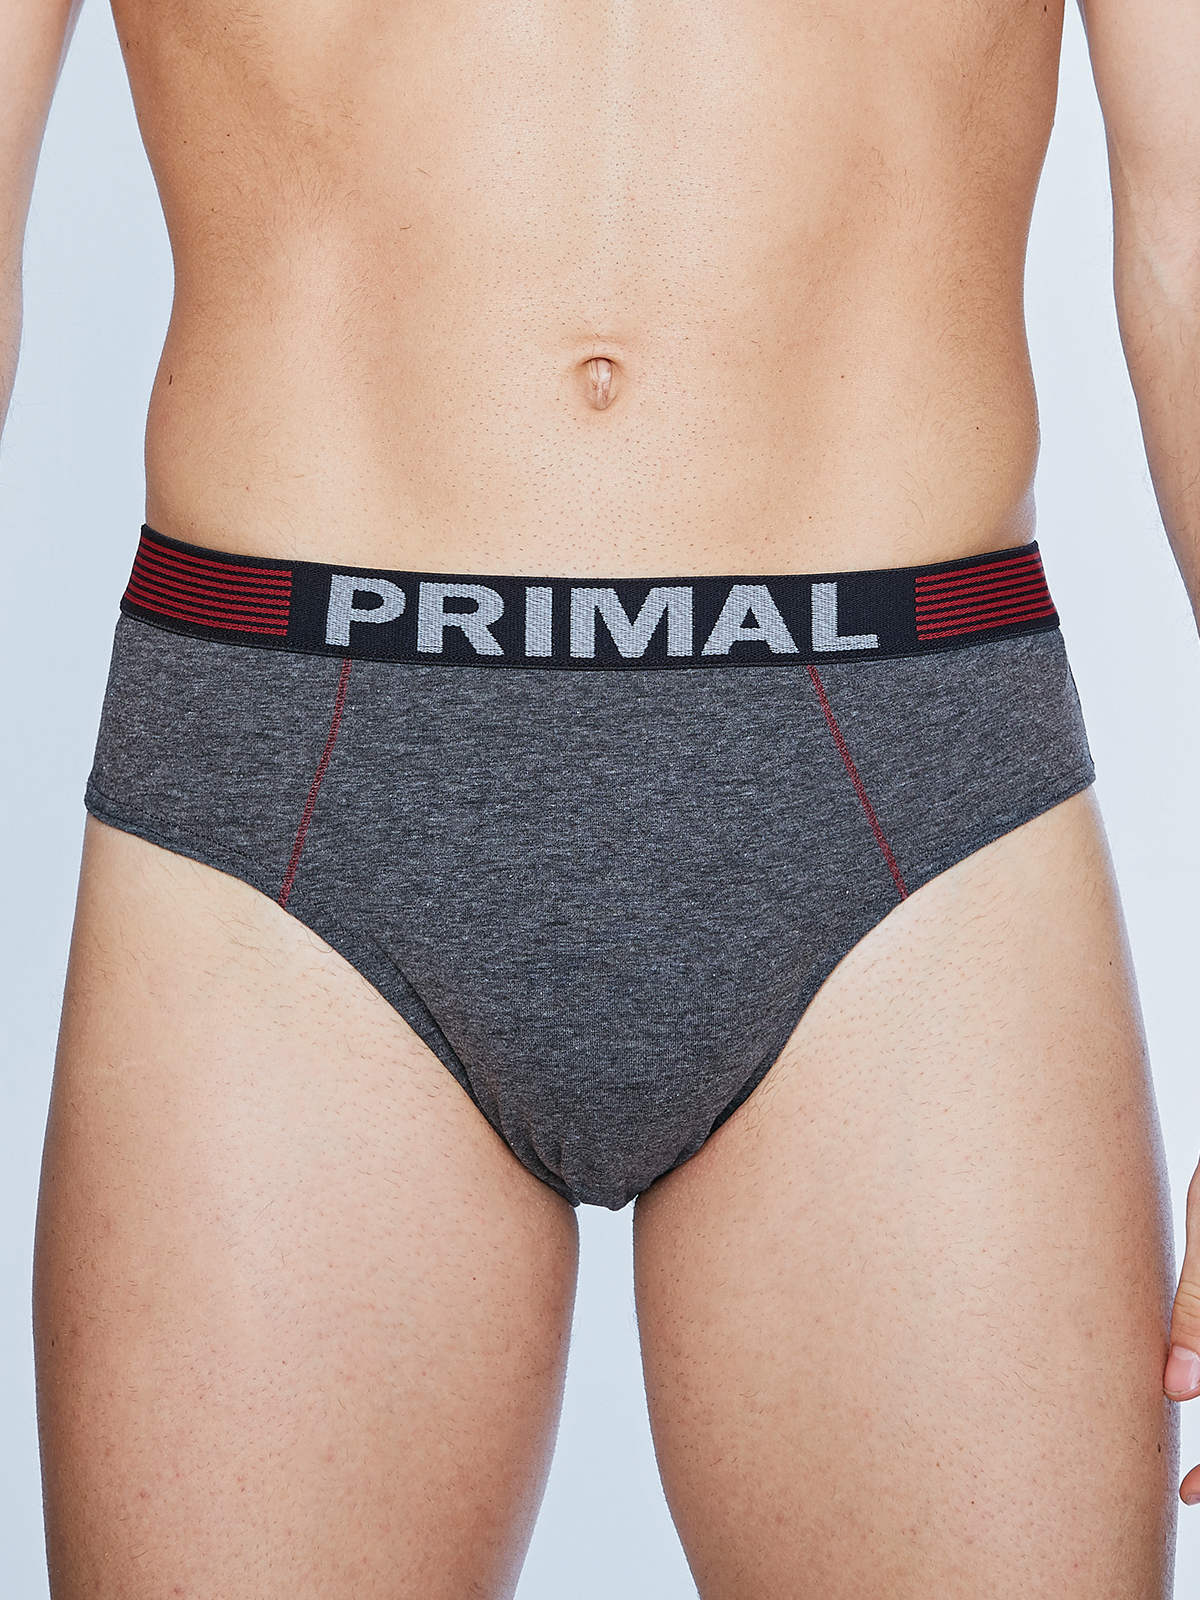 Трусы мужские Primal PRIMAL S195 (3 шт.) slip серый/серый/серый